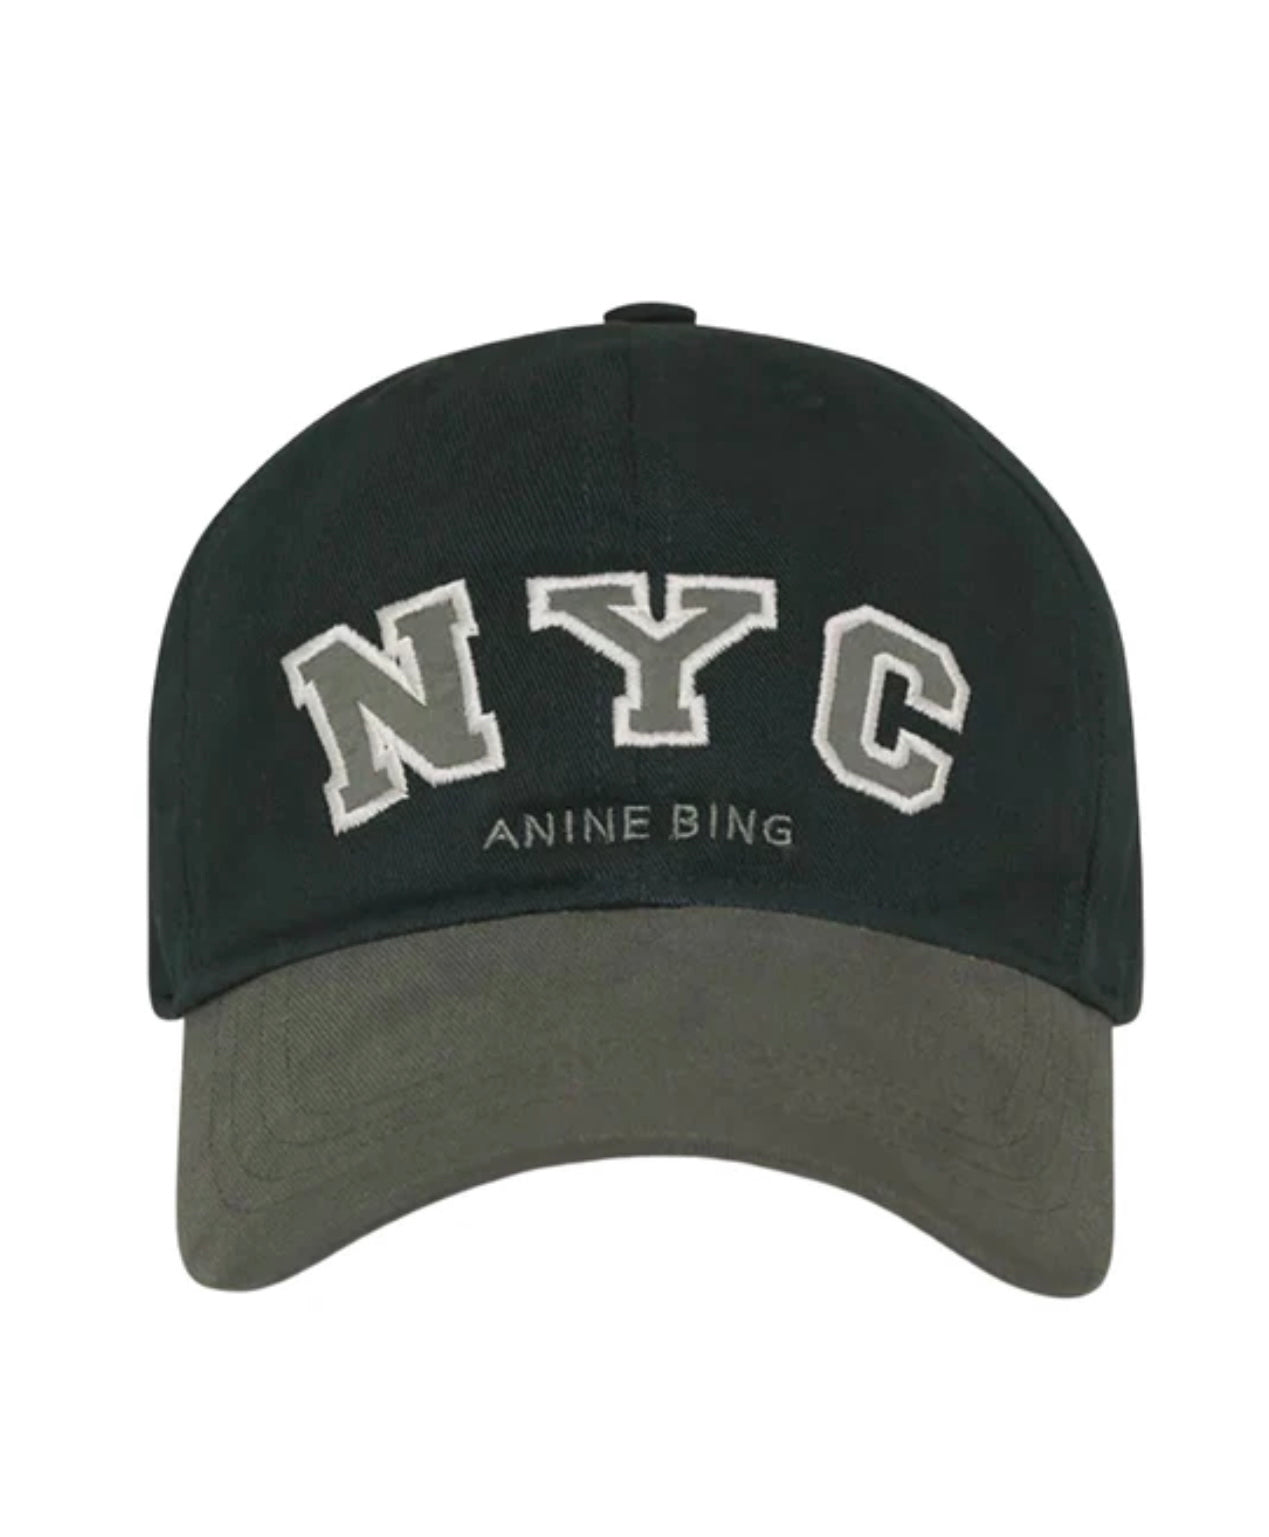 ANINE BING JEREMY BASEBALL CAP NYC CHARCOAL GREEN